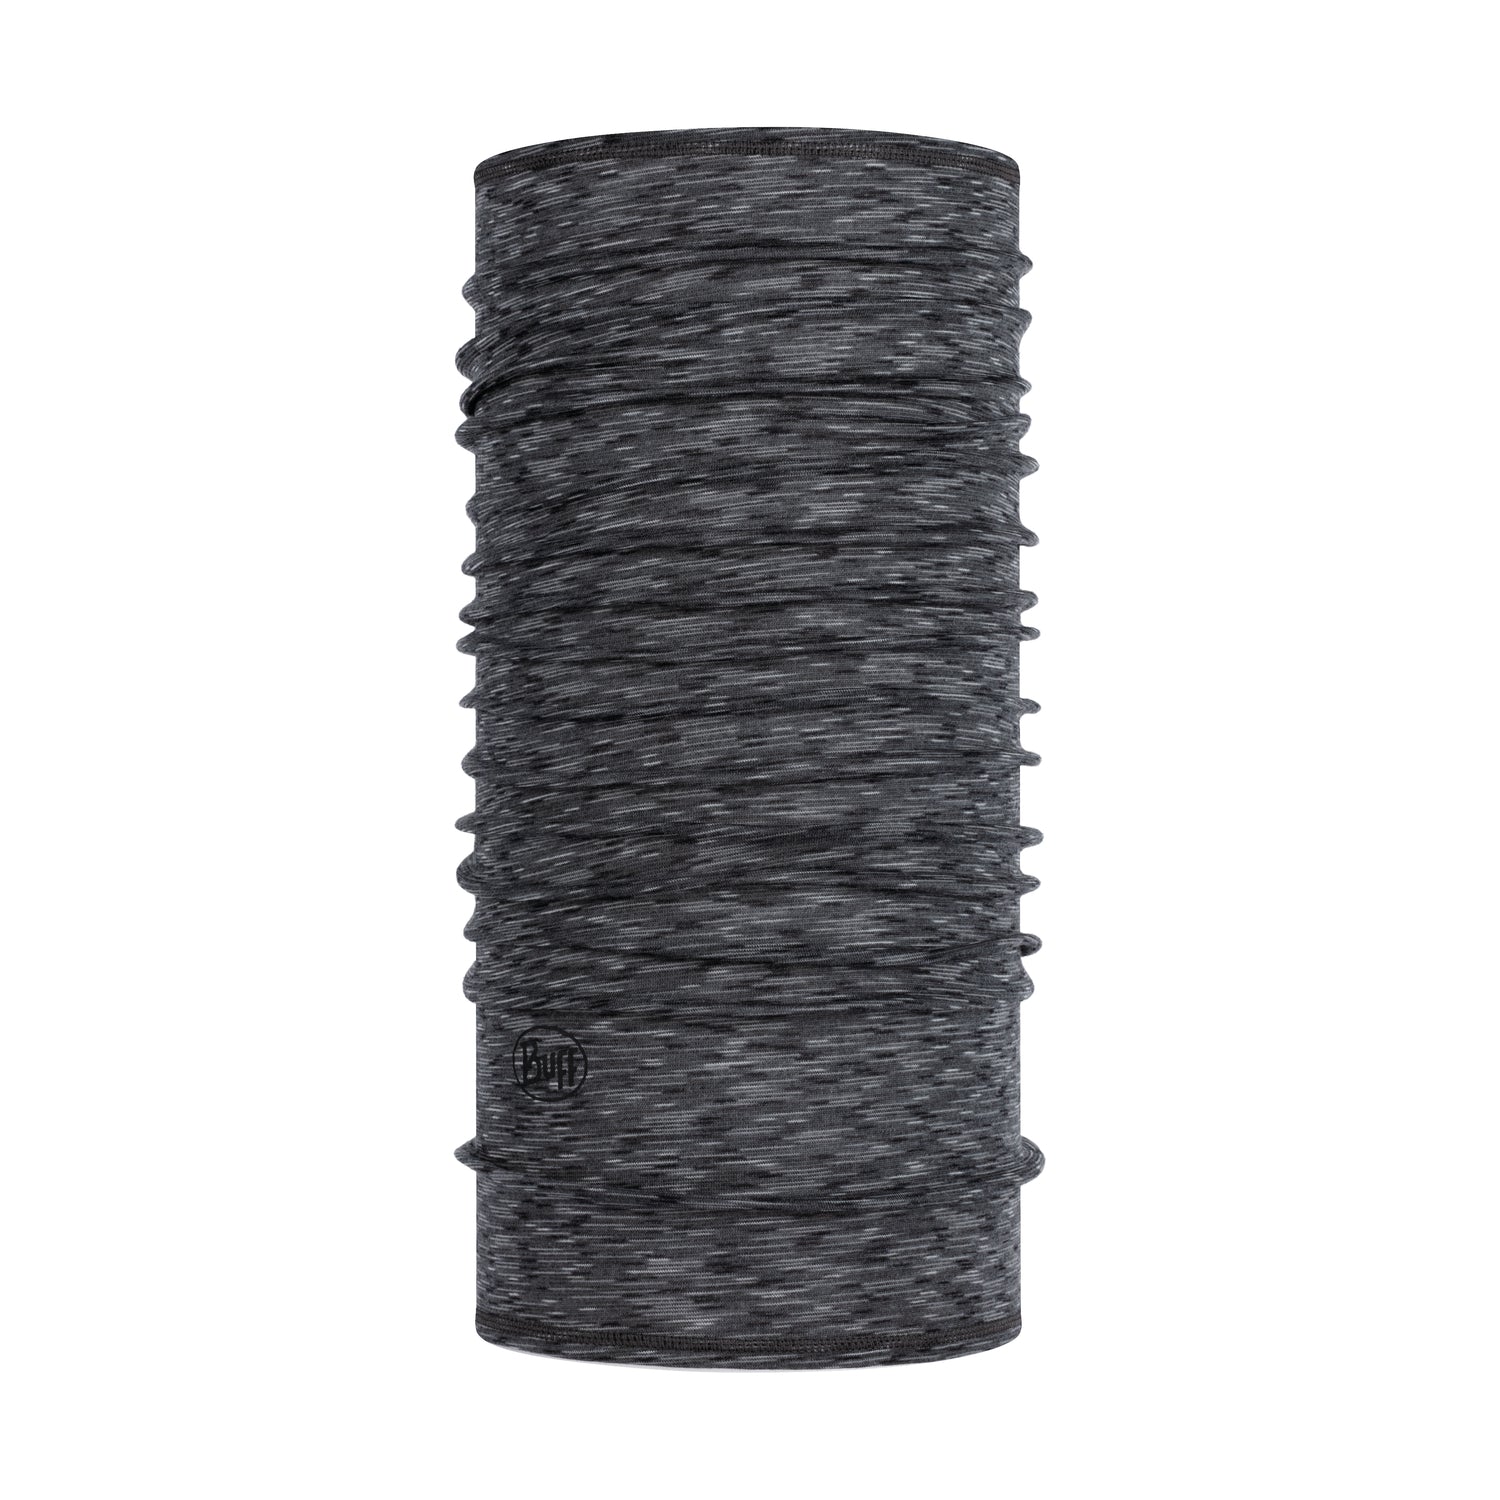  Lightweight Merino Wool Tubular Graphite Multi Stripes Ref. 117819.901.10.00